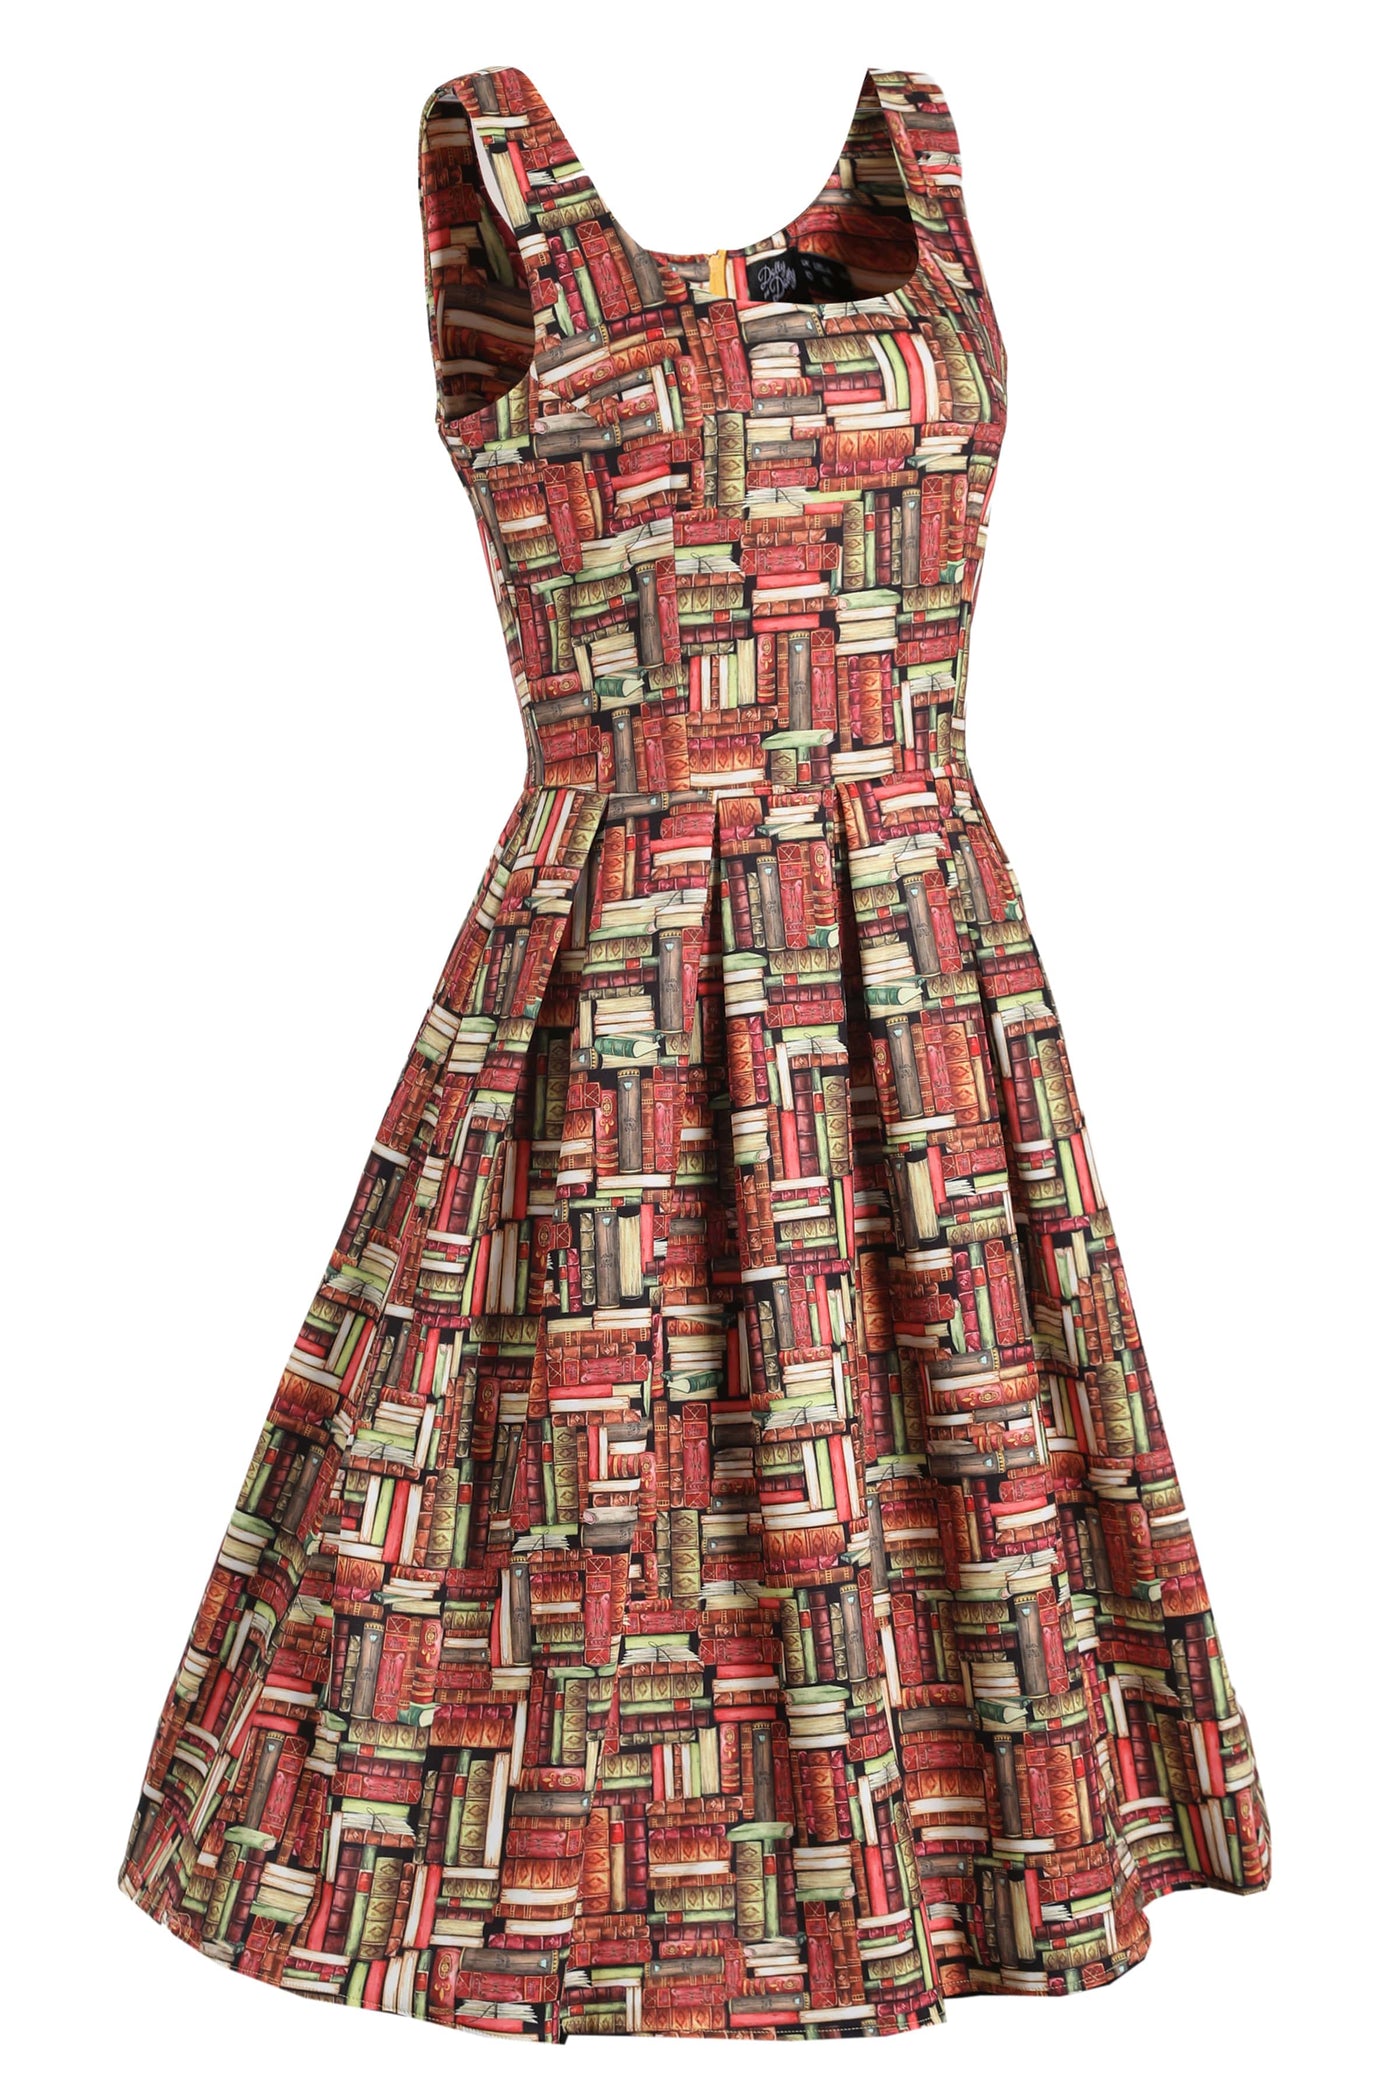  Book Print Tea Dress